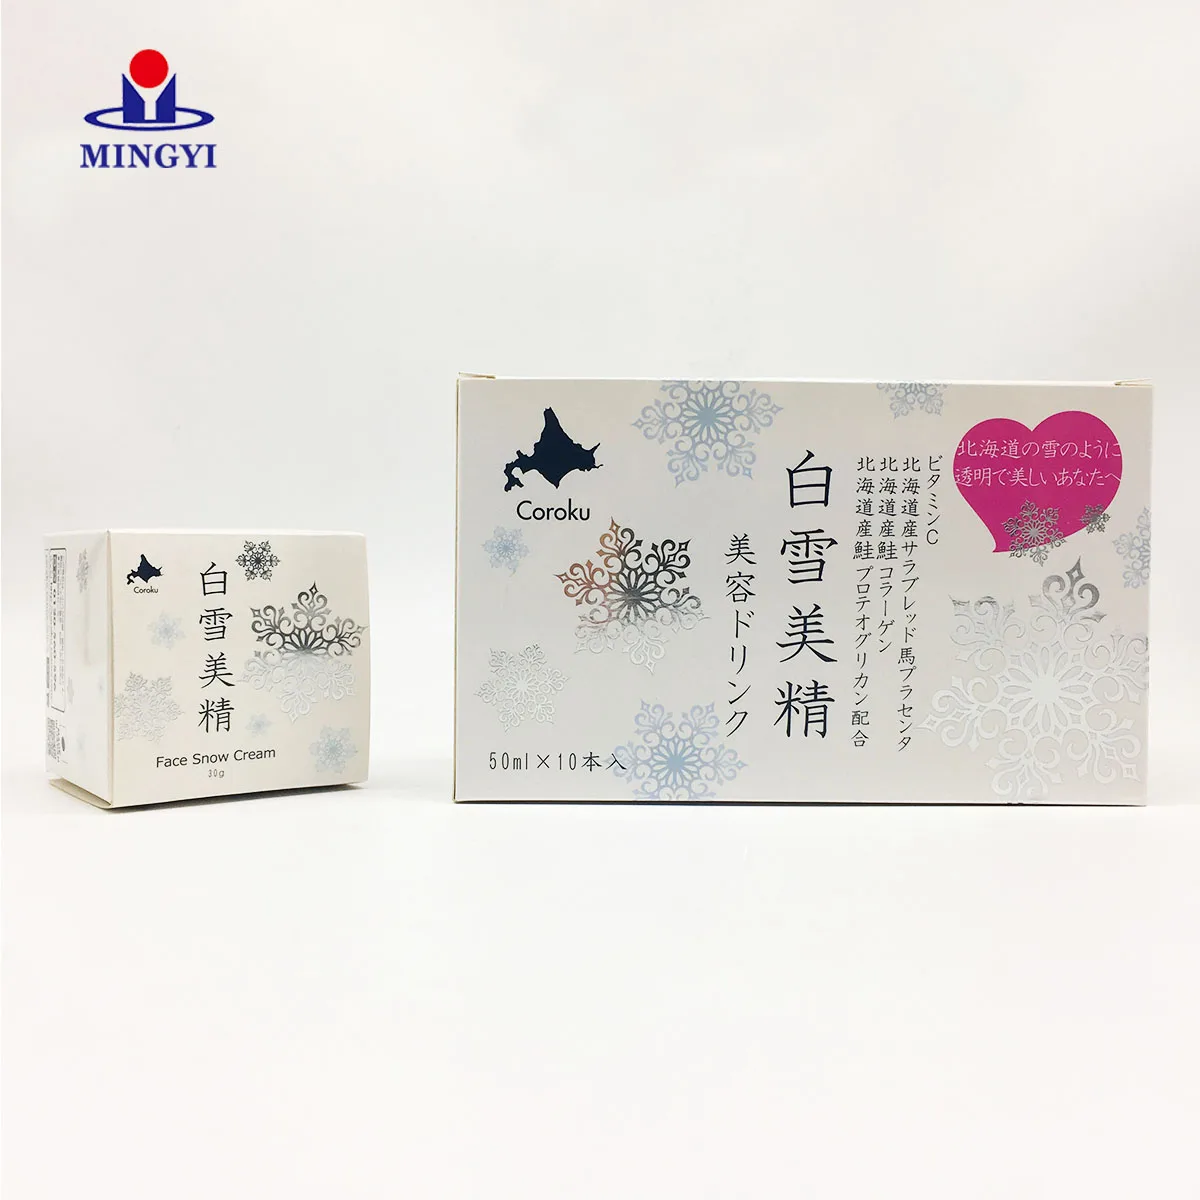 product-Mingyi Printing-img